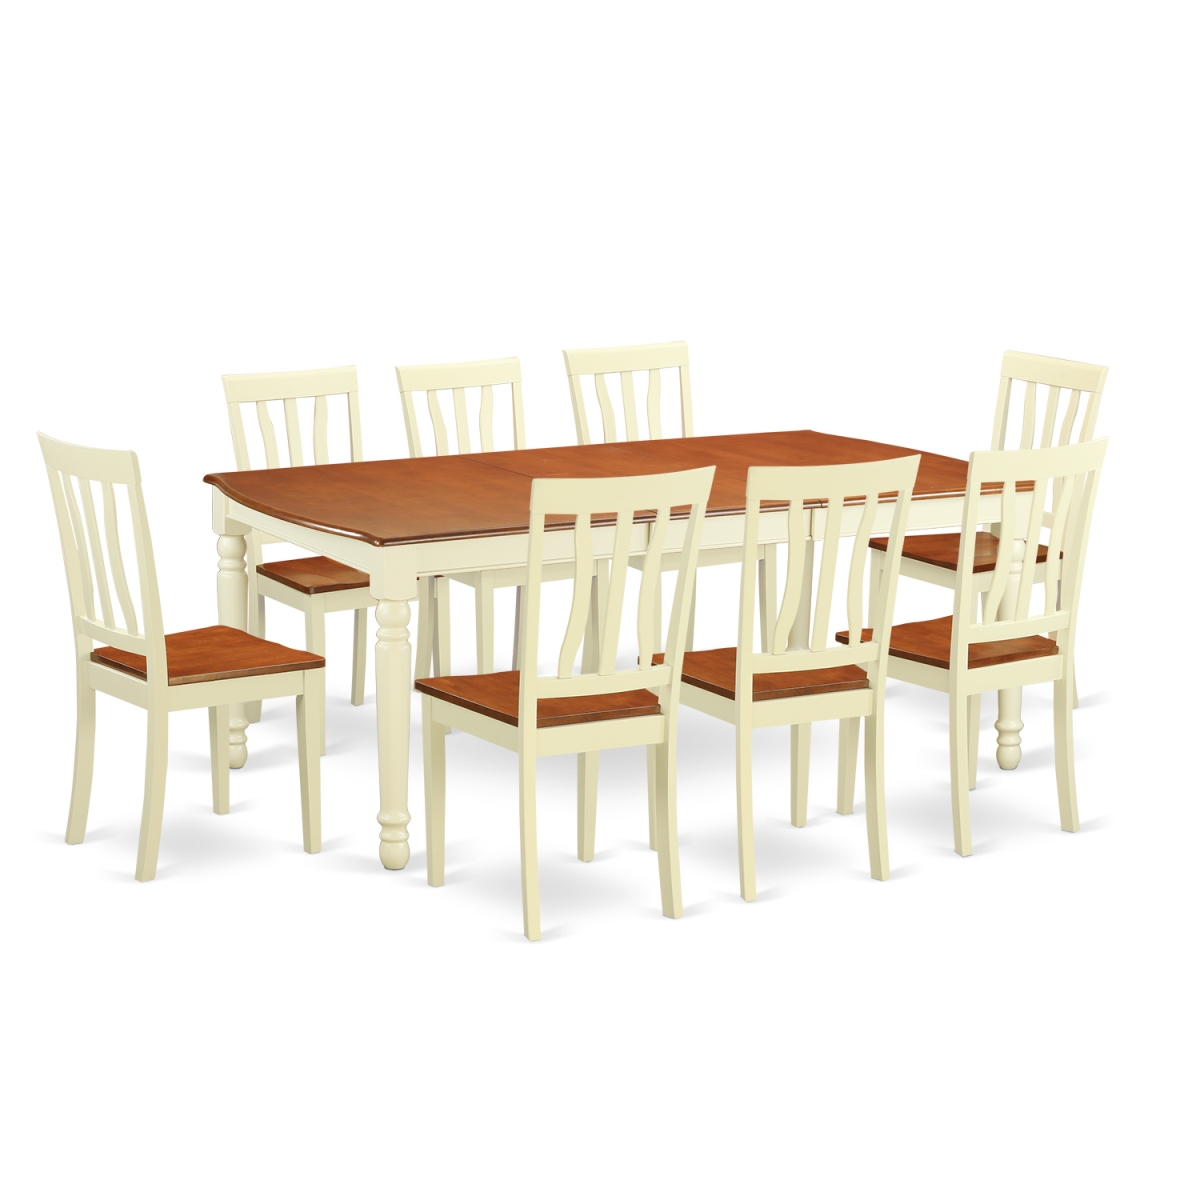 Dinette Set - Table & 8 Chairs, Buttermilk & Cherry - 9 Piece